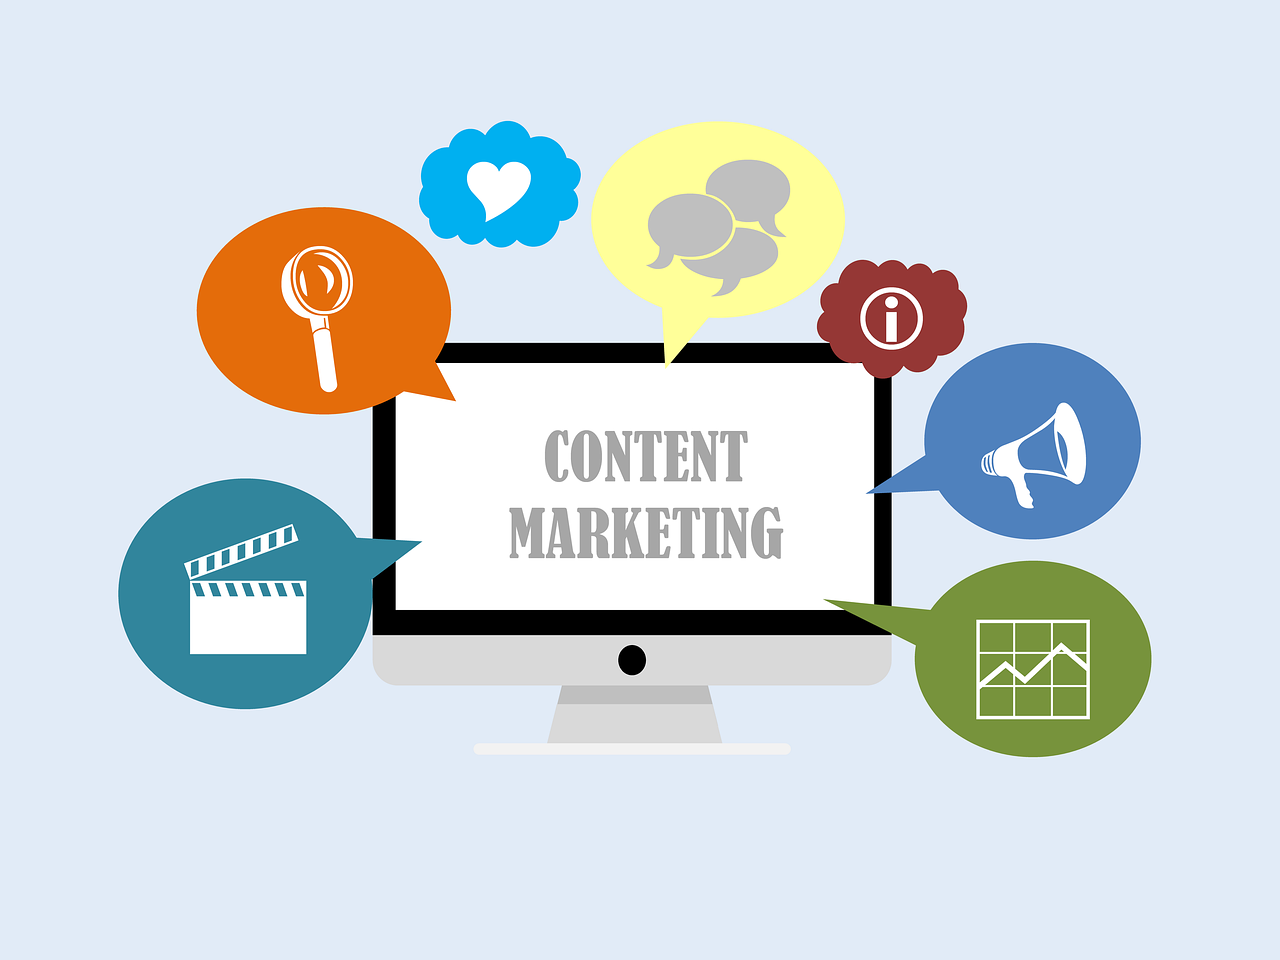 A content marketing concept image